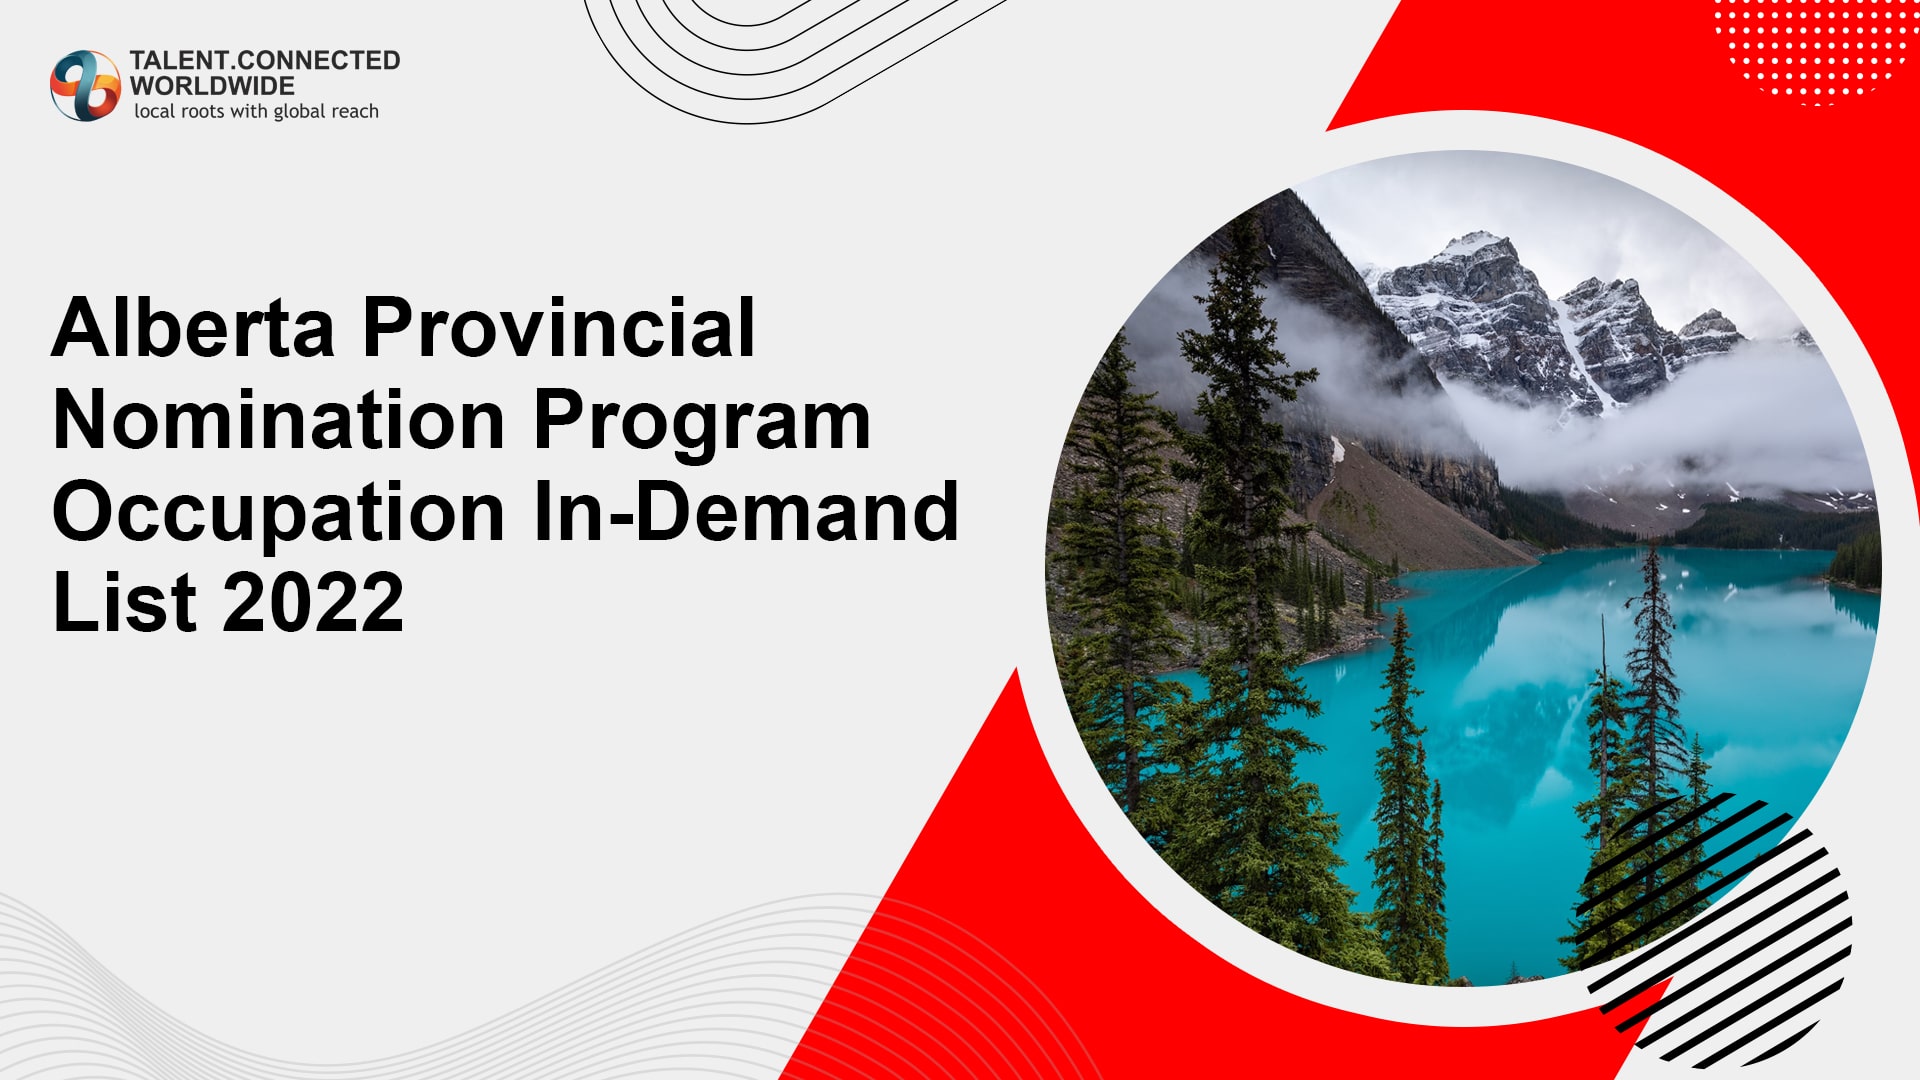 Alberta Provincial Nomination Program Occupation In-Demand List 2022